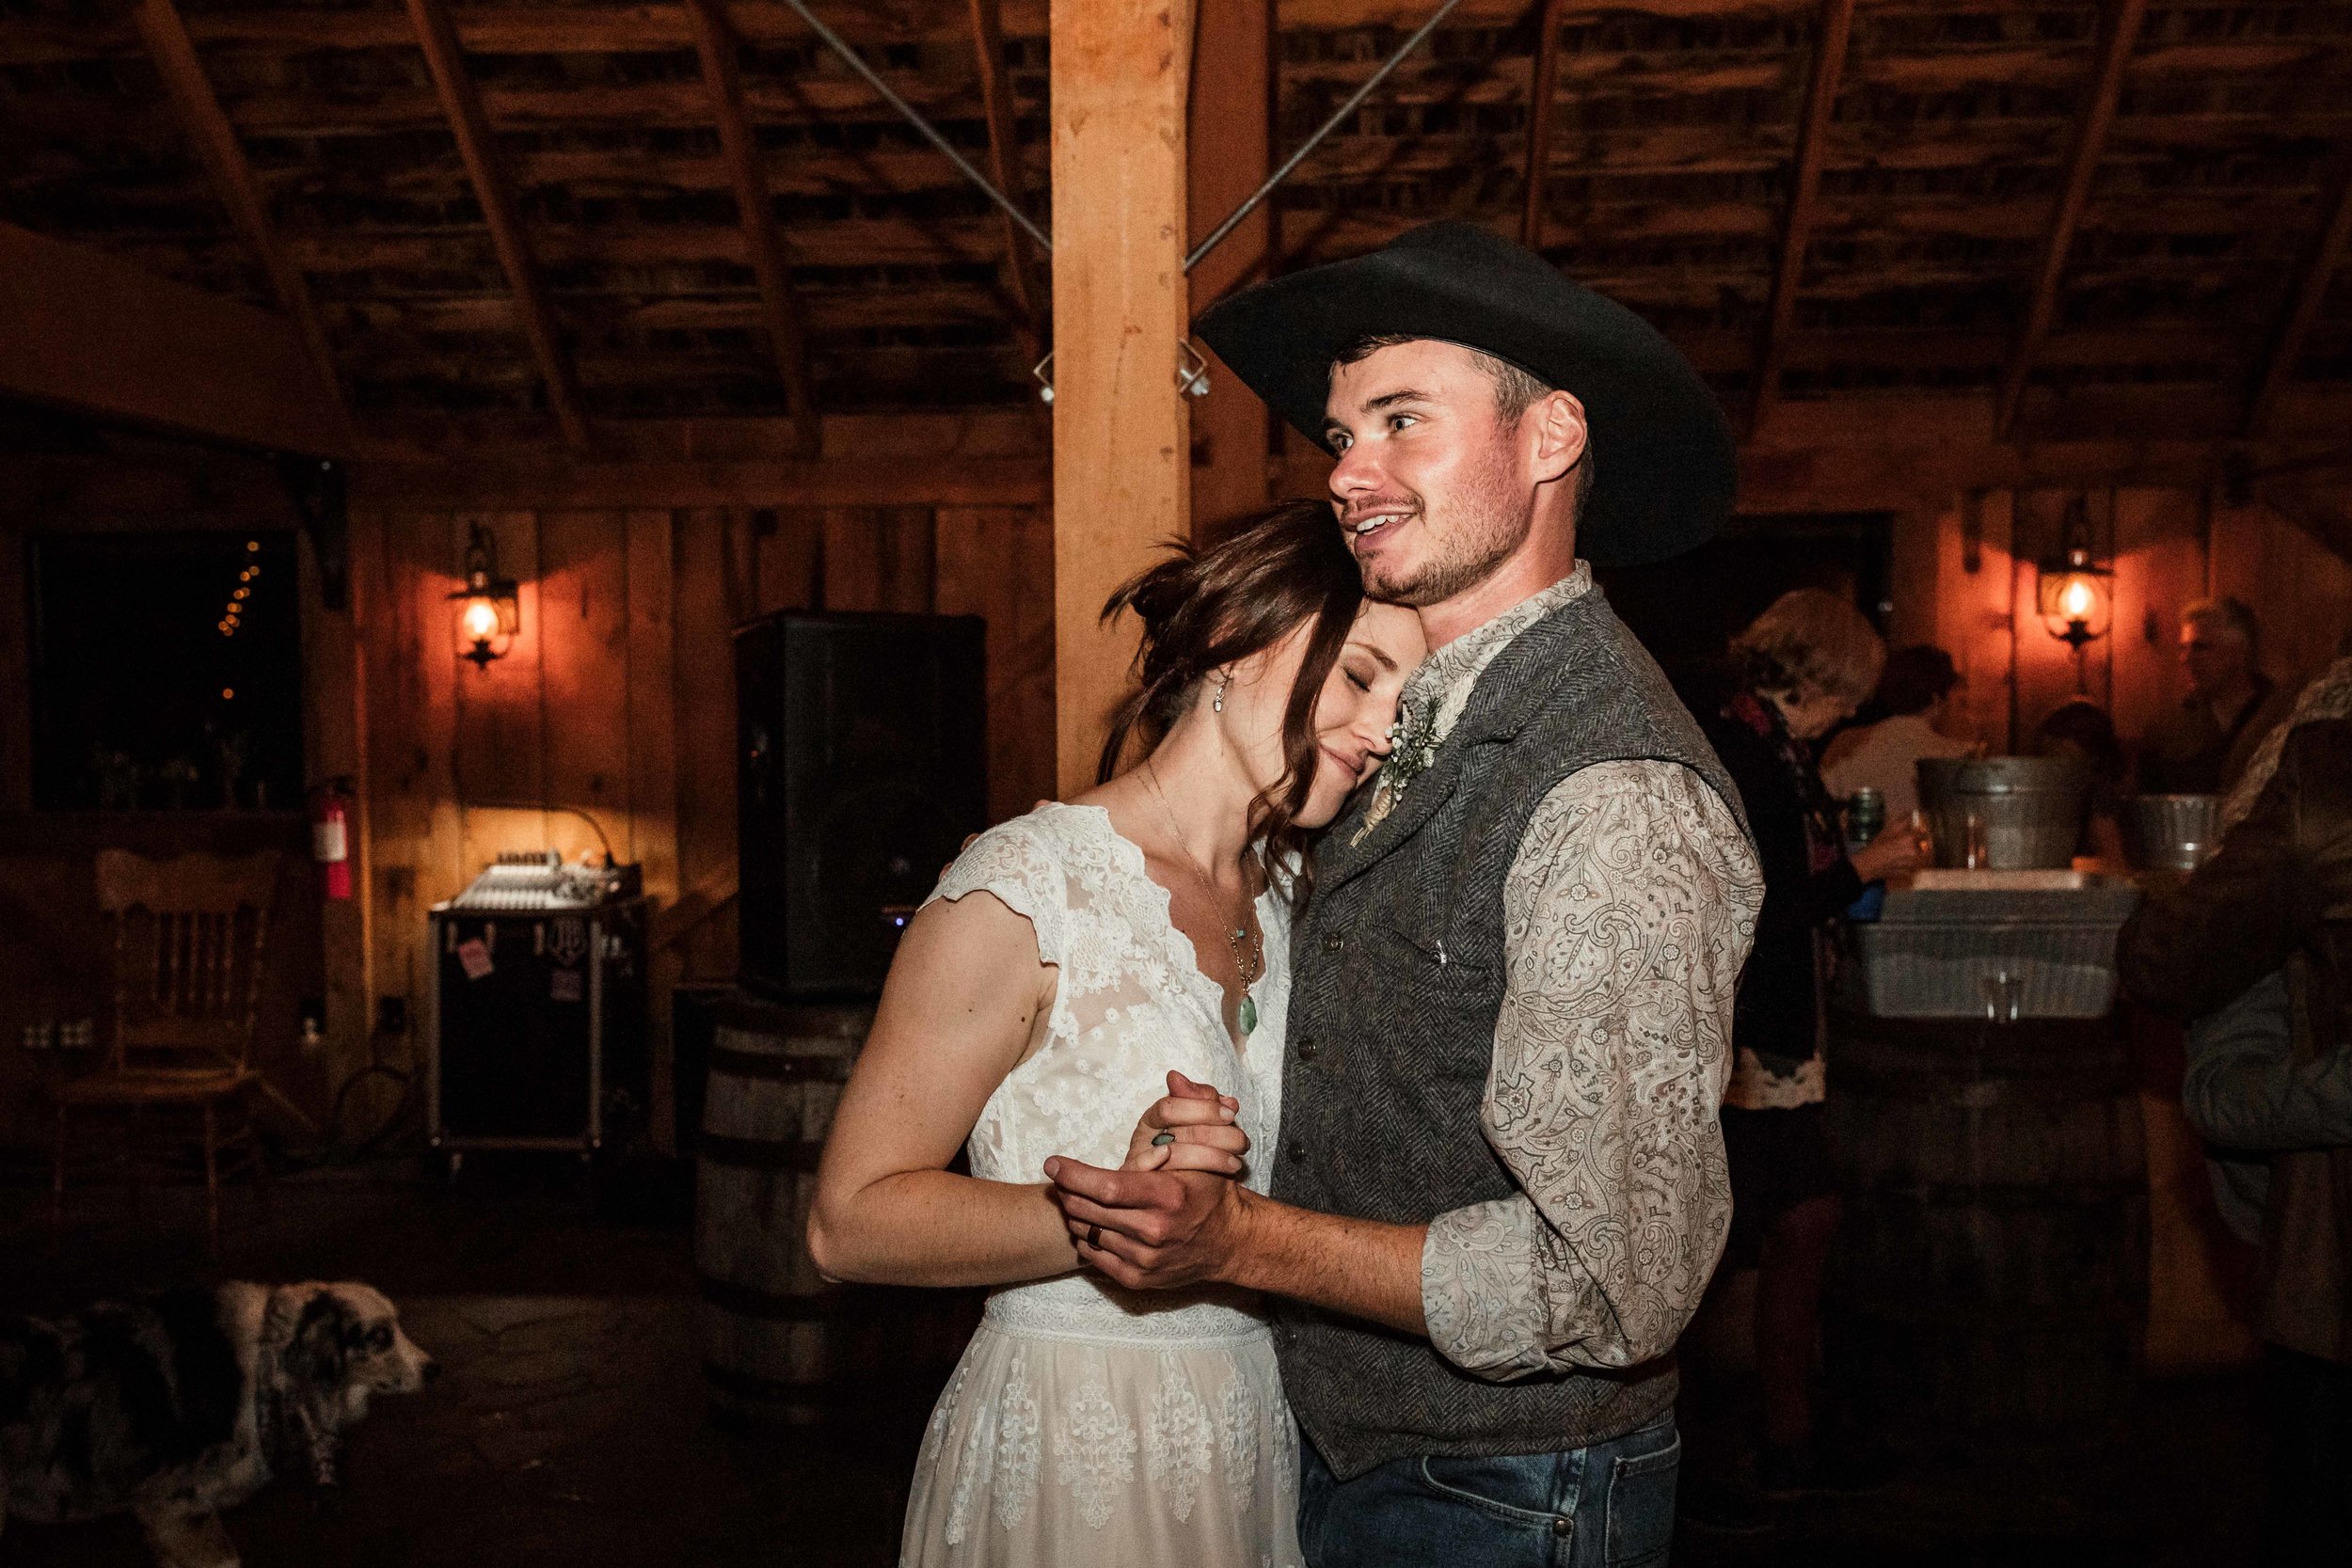 The Cattle Barn Fall Wedding